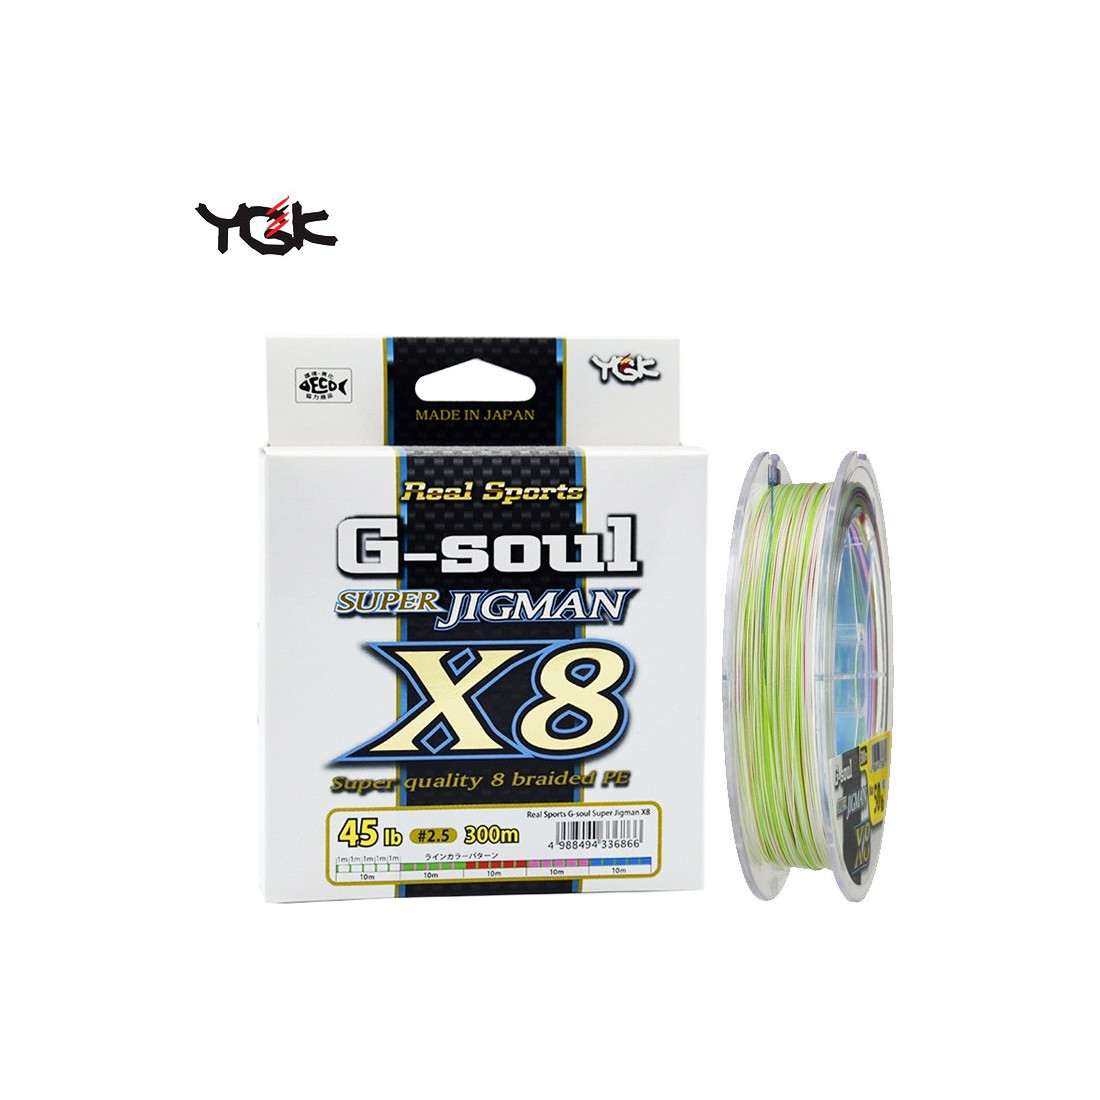 YGK G-Soul Super Jigman X8 200m Braided line Made in Japan 